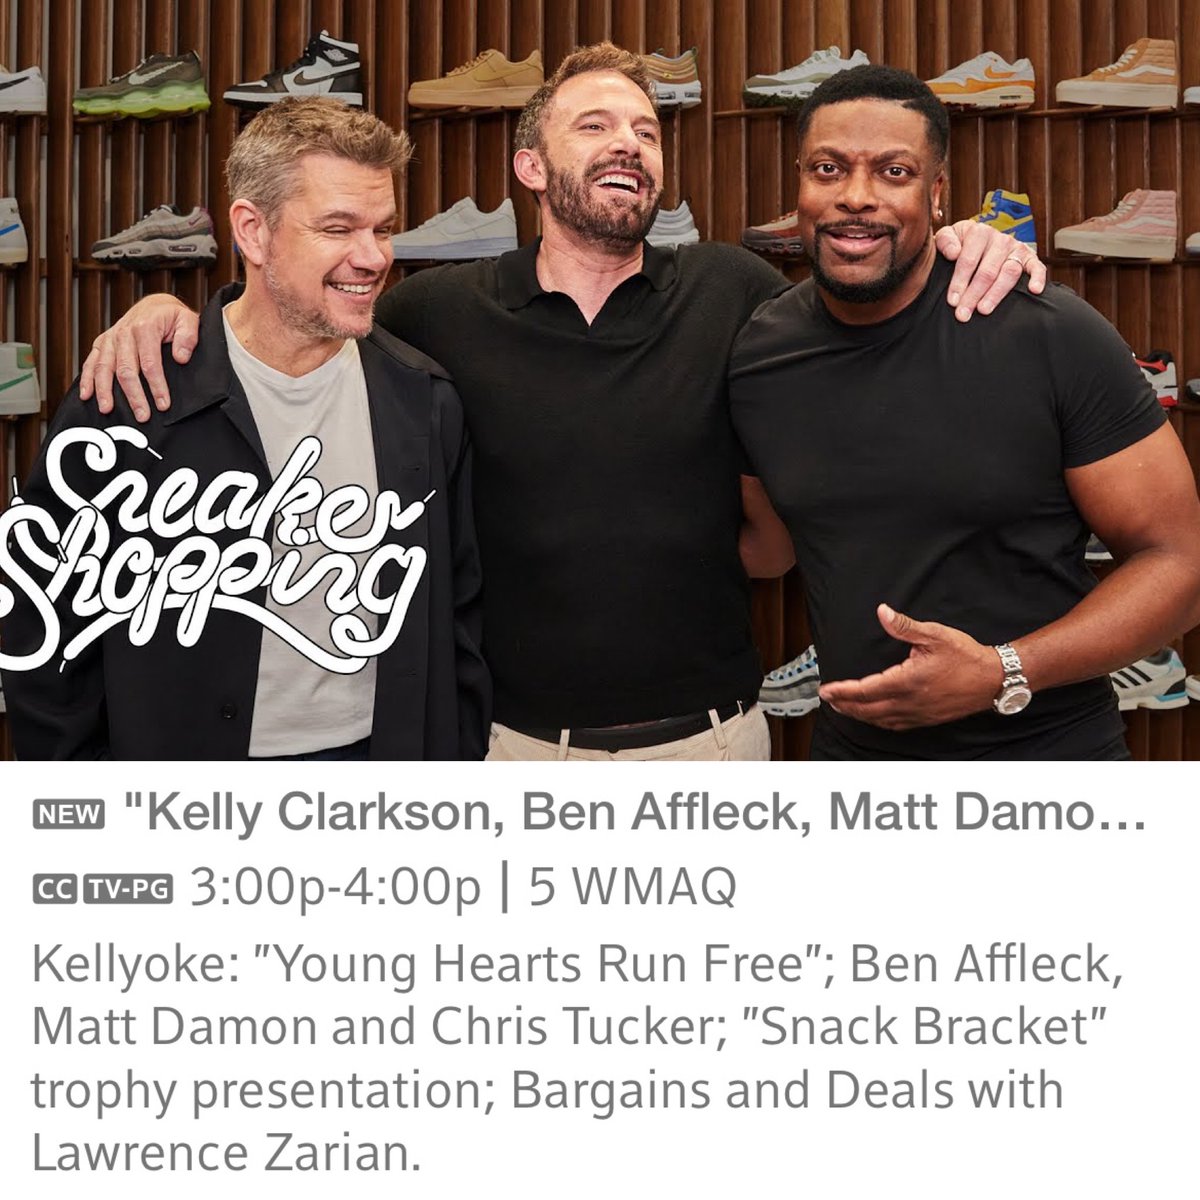 Ben Affleck, Matt Damon, and Chris Tucker will be on the Kelly Clarkson Show Monday (April 3) 

#AIRmovie #BenAffleck #MattDamon #ChrisTucker #TheKellyClarksonShow